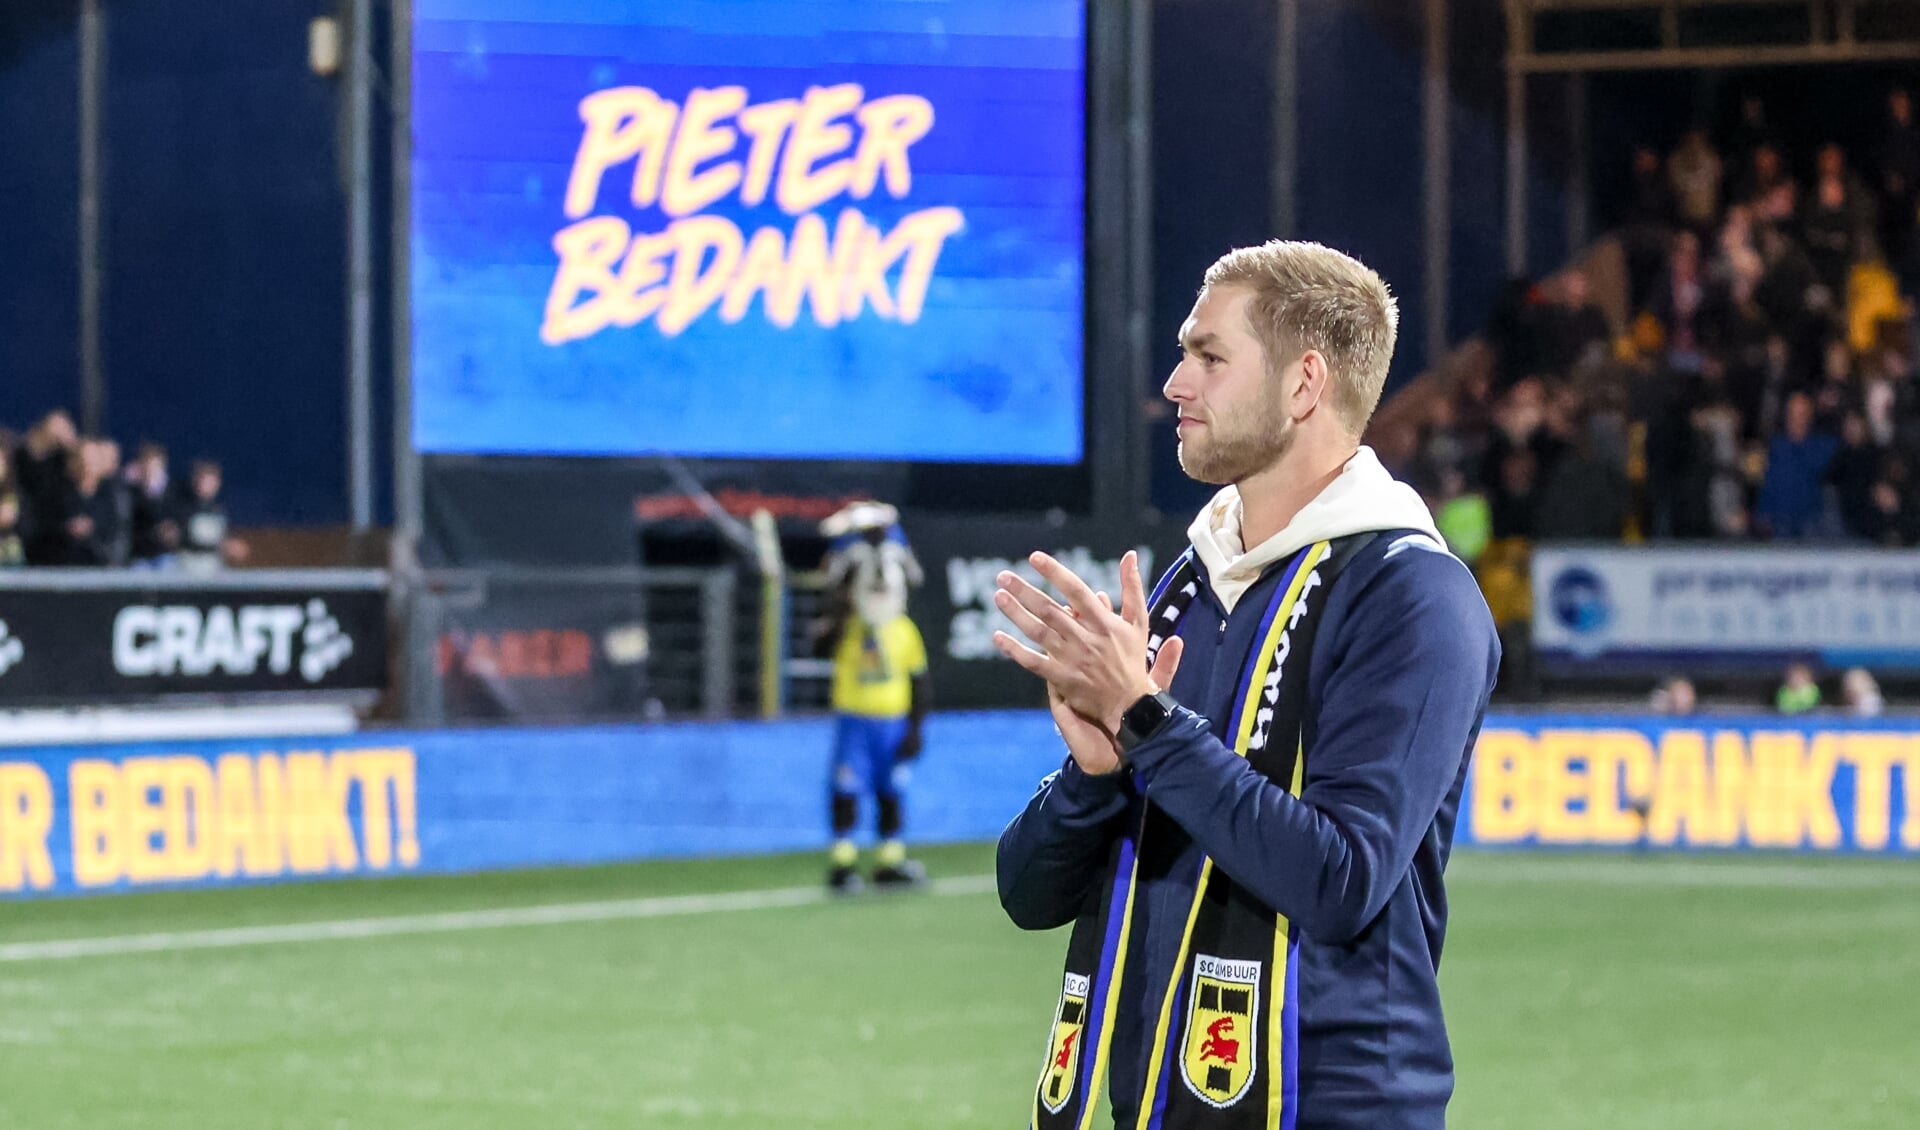 Pieter Bos neemt afscheid van SC Cambuur. 